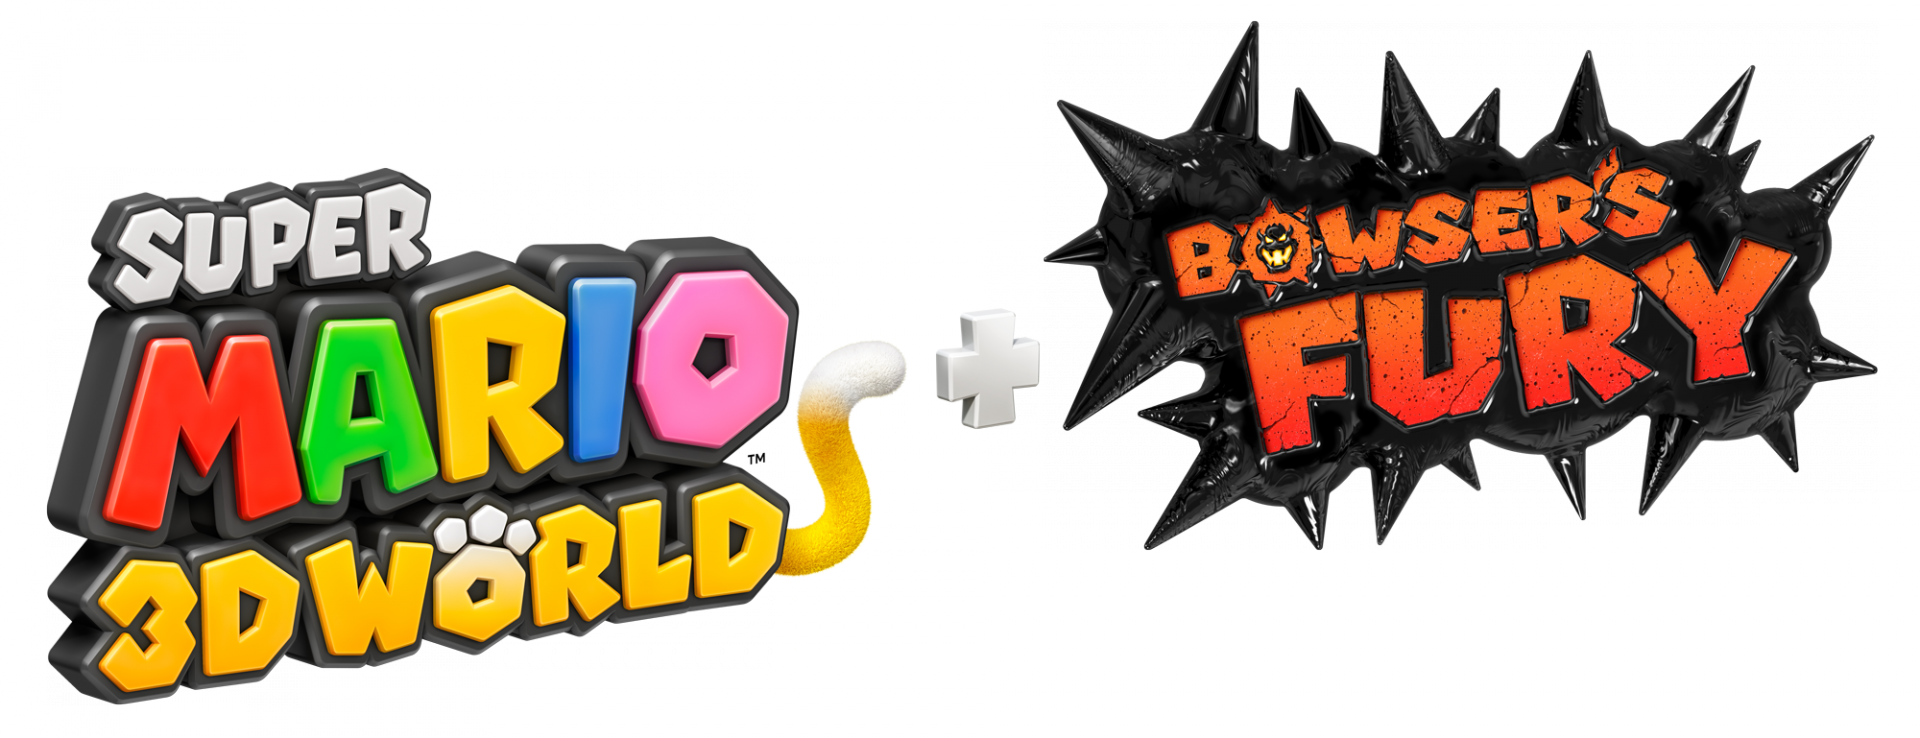 Super mario bowser fury. Super Mario 3d World + Bowser's Fury. Марио Bowser Fury. Игра super Mario 3d World Bowser's Fury Switch. Super Mario 3d World Bowser's Fury картридж.